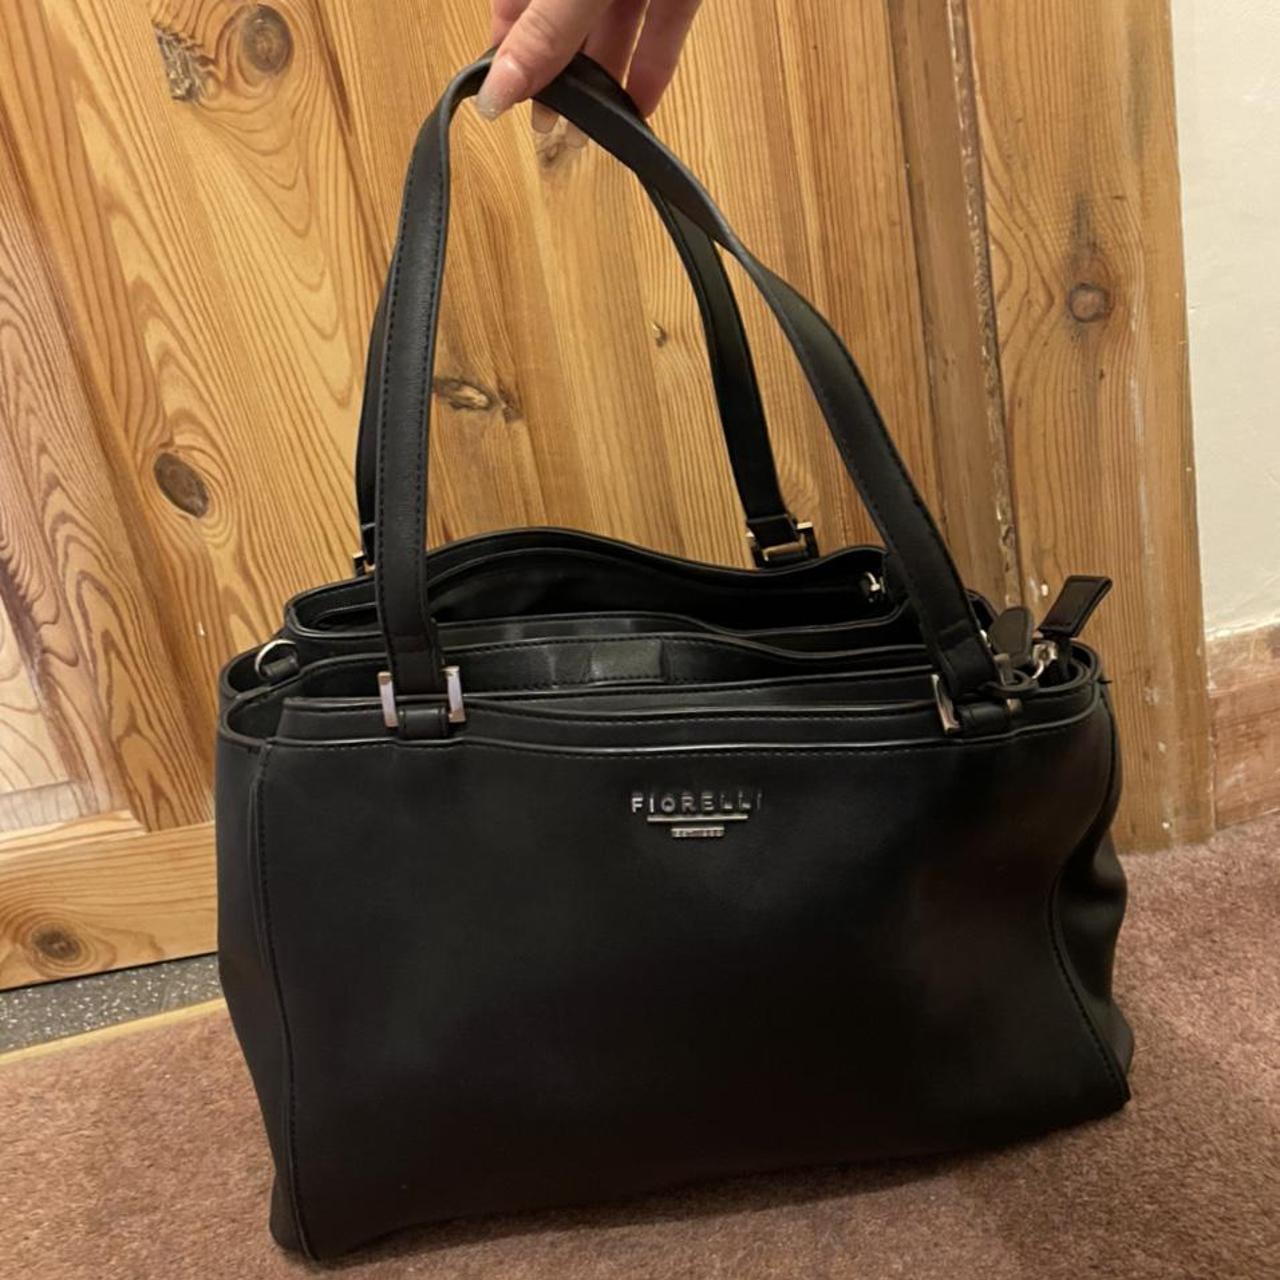 Product Image 1 - Fiorelli Black Leather Compartment Bag